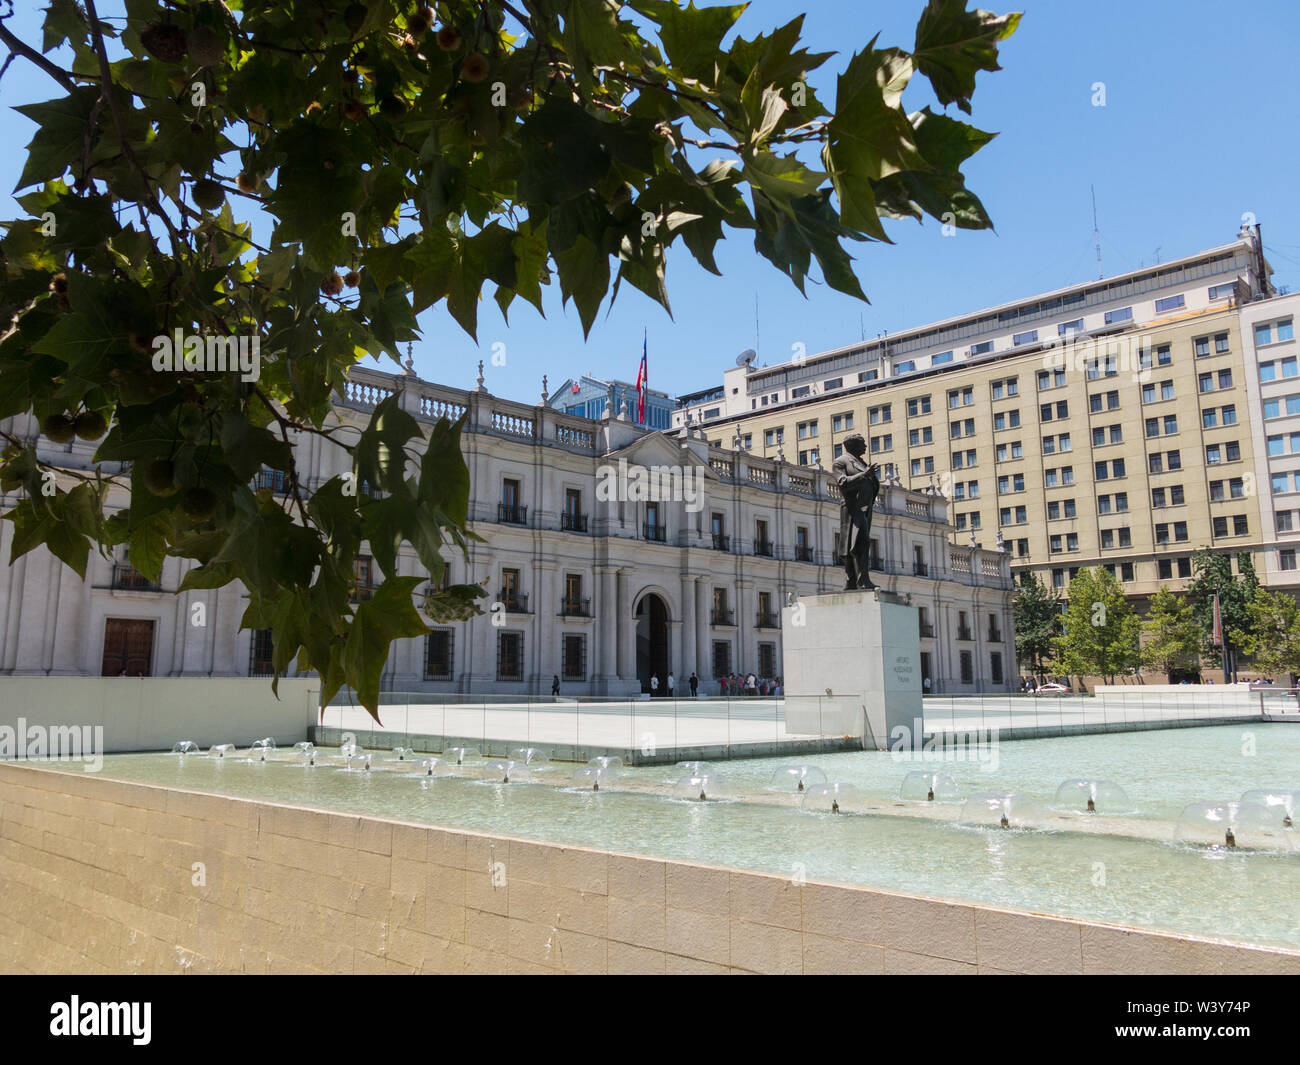 SANTIAGO DE CHILE, CHILE - JANUARY 26, 2018: Monument to Arturo Alessandri Palma in Santiago de Chile, in front of the Moneda Palace. He was President Stock Photo